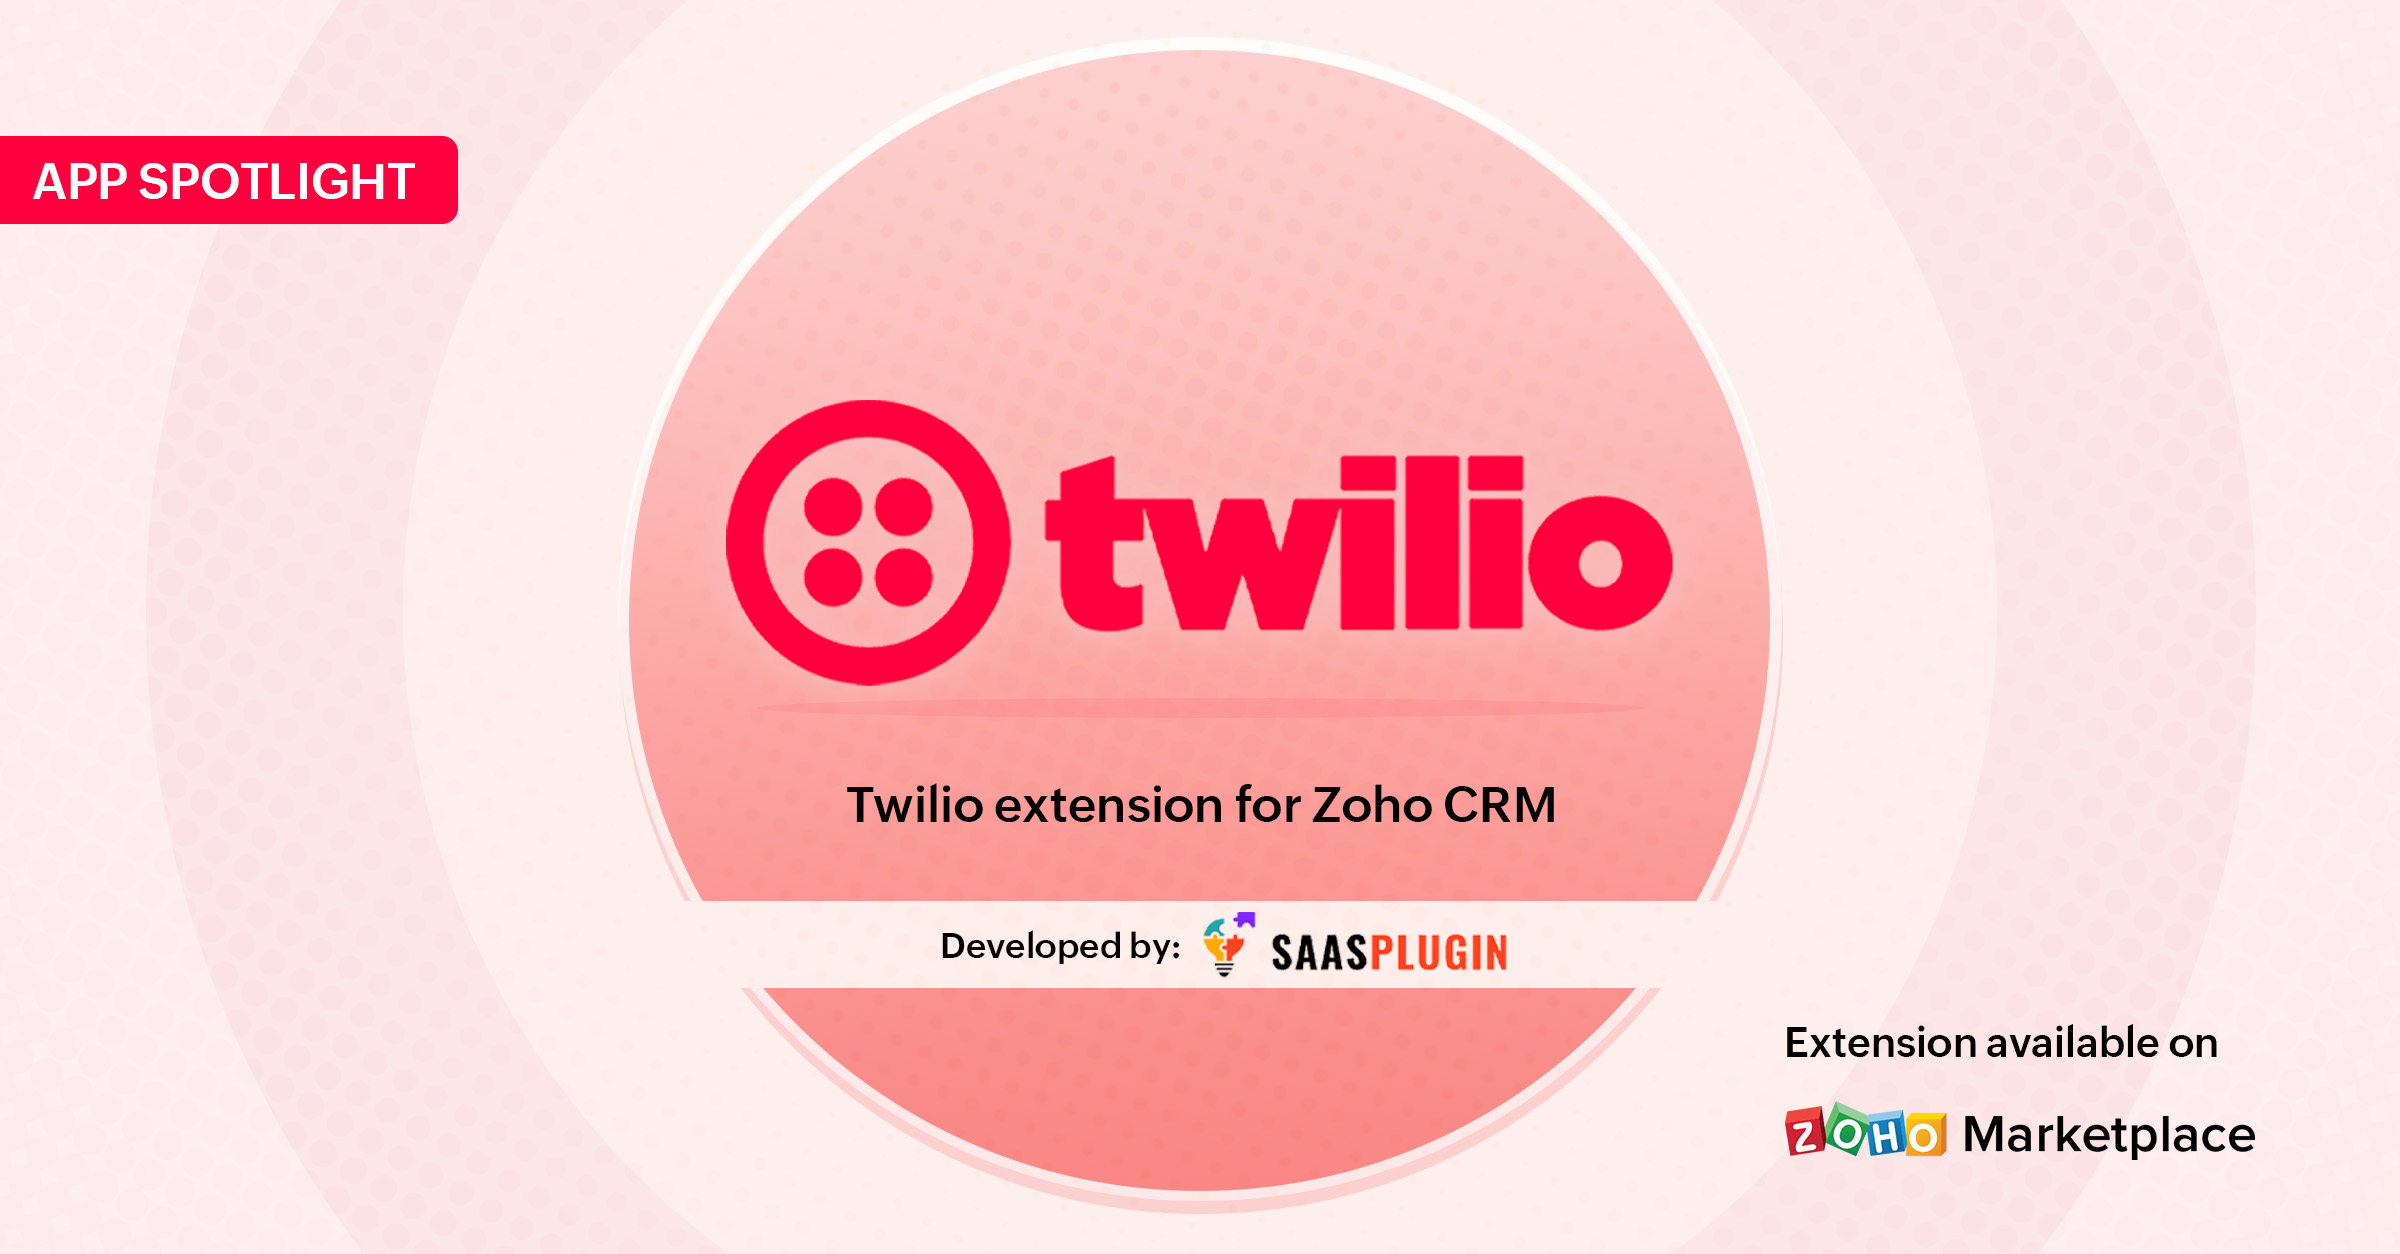 App Spotlight: Twilio extension for Zoho CRM